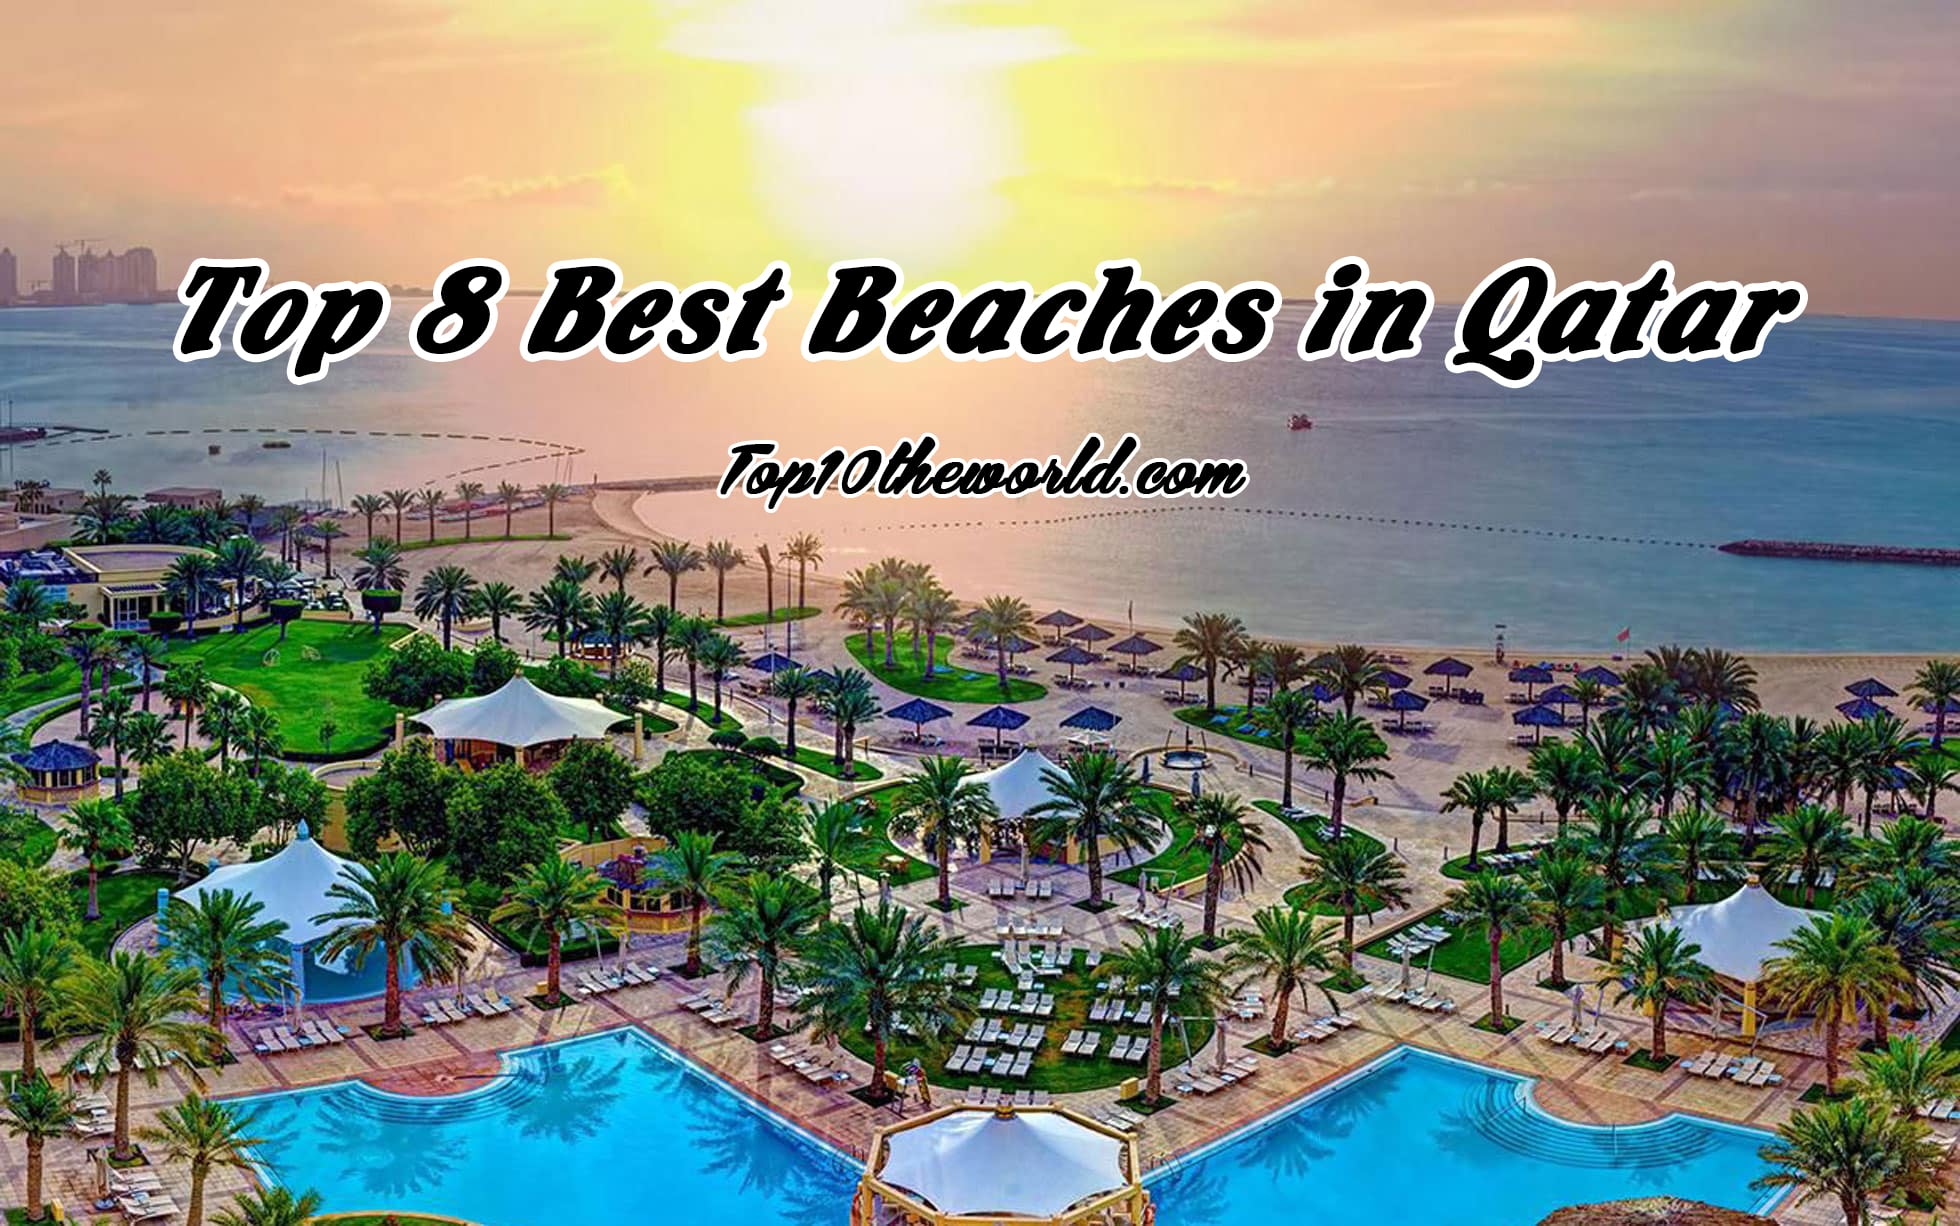 Top 8 Best Beaches in Qatar